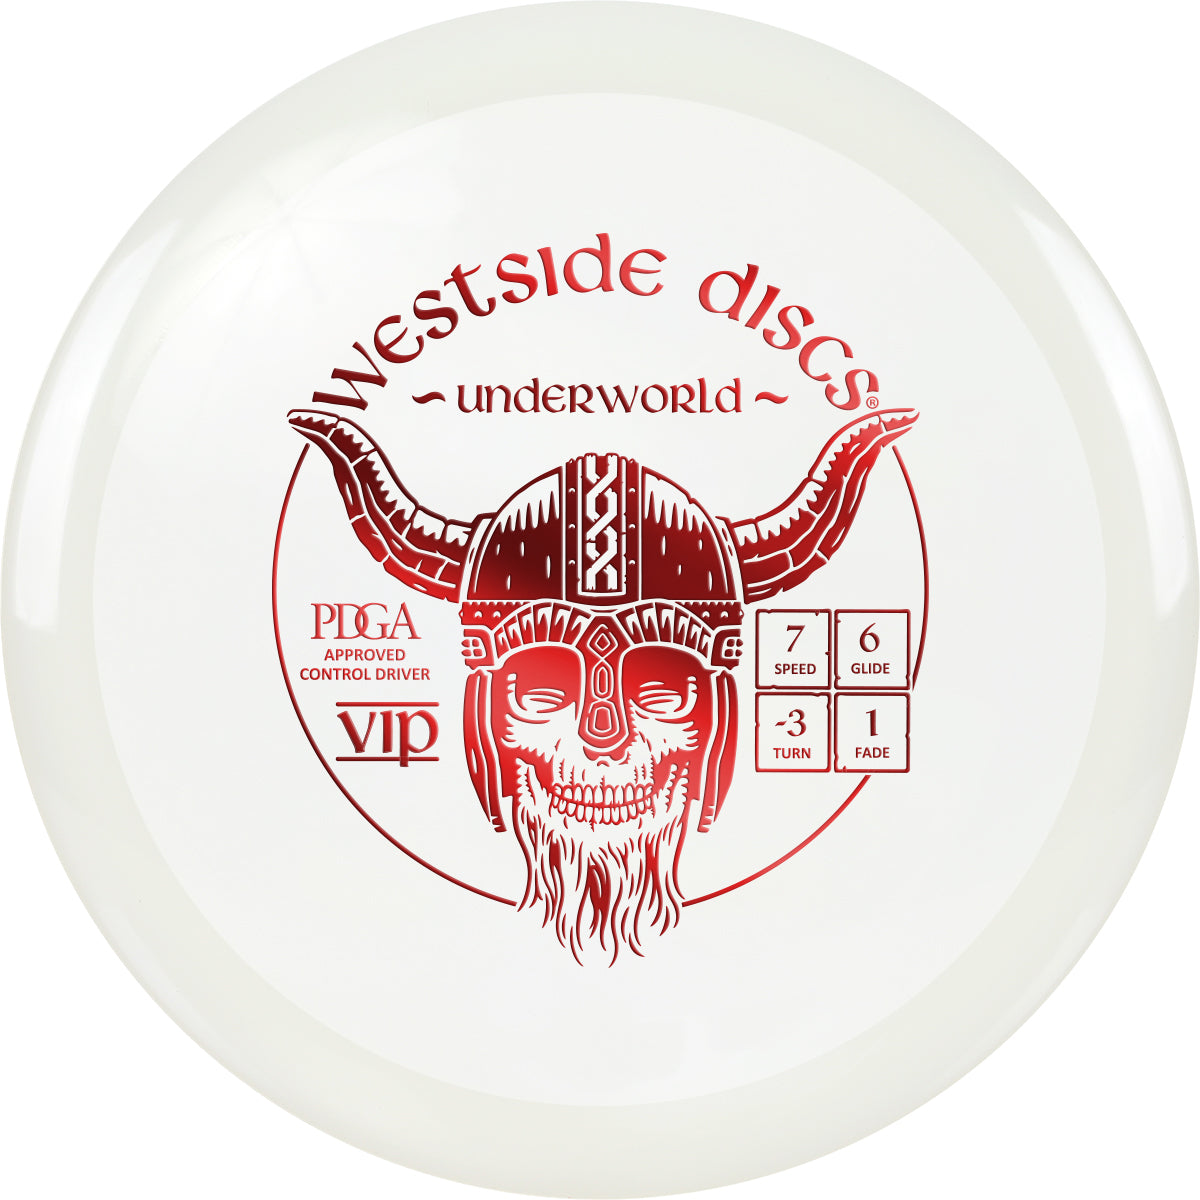 WESTSIDEDISC - Vip Underworld